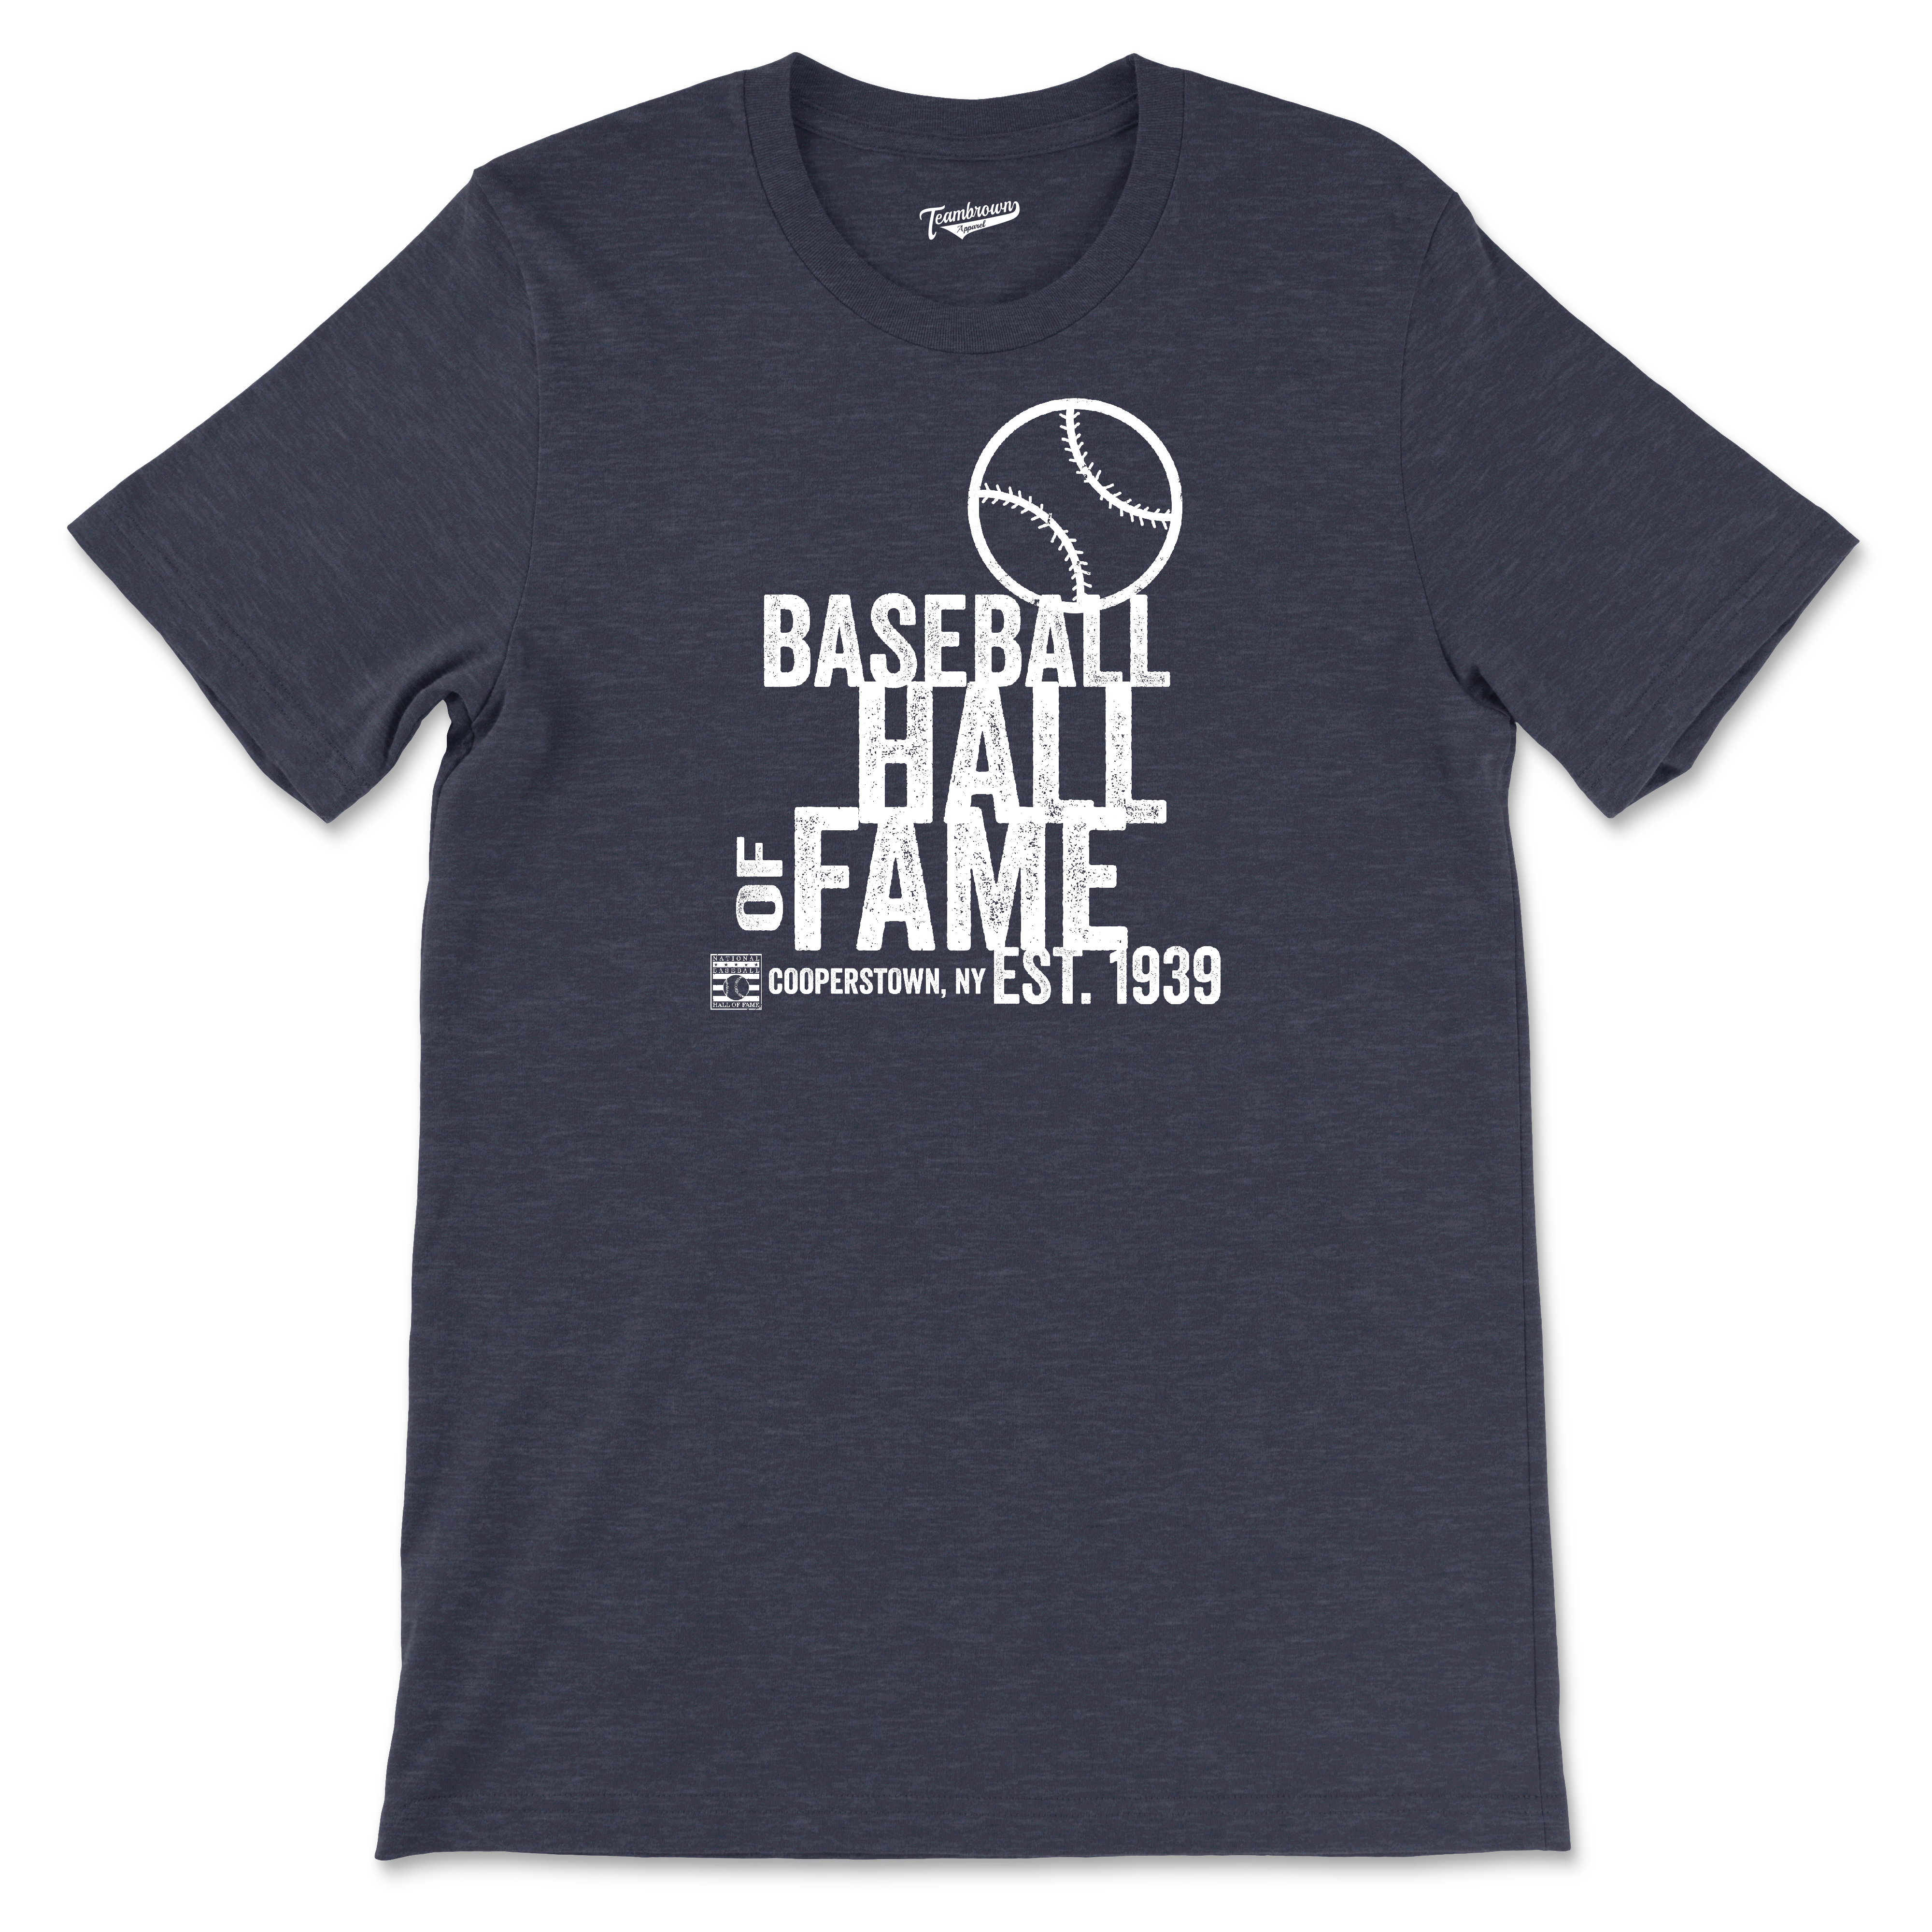 Baseball Hall of Fame - Retro - Unisex T-Shirt